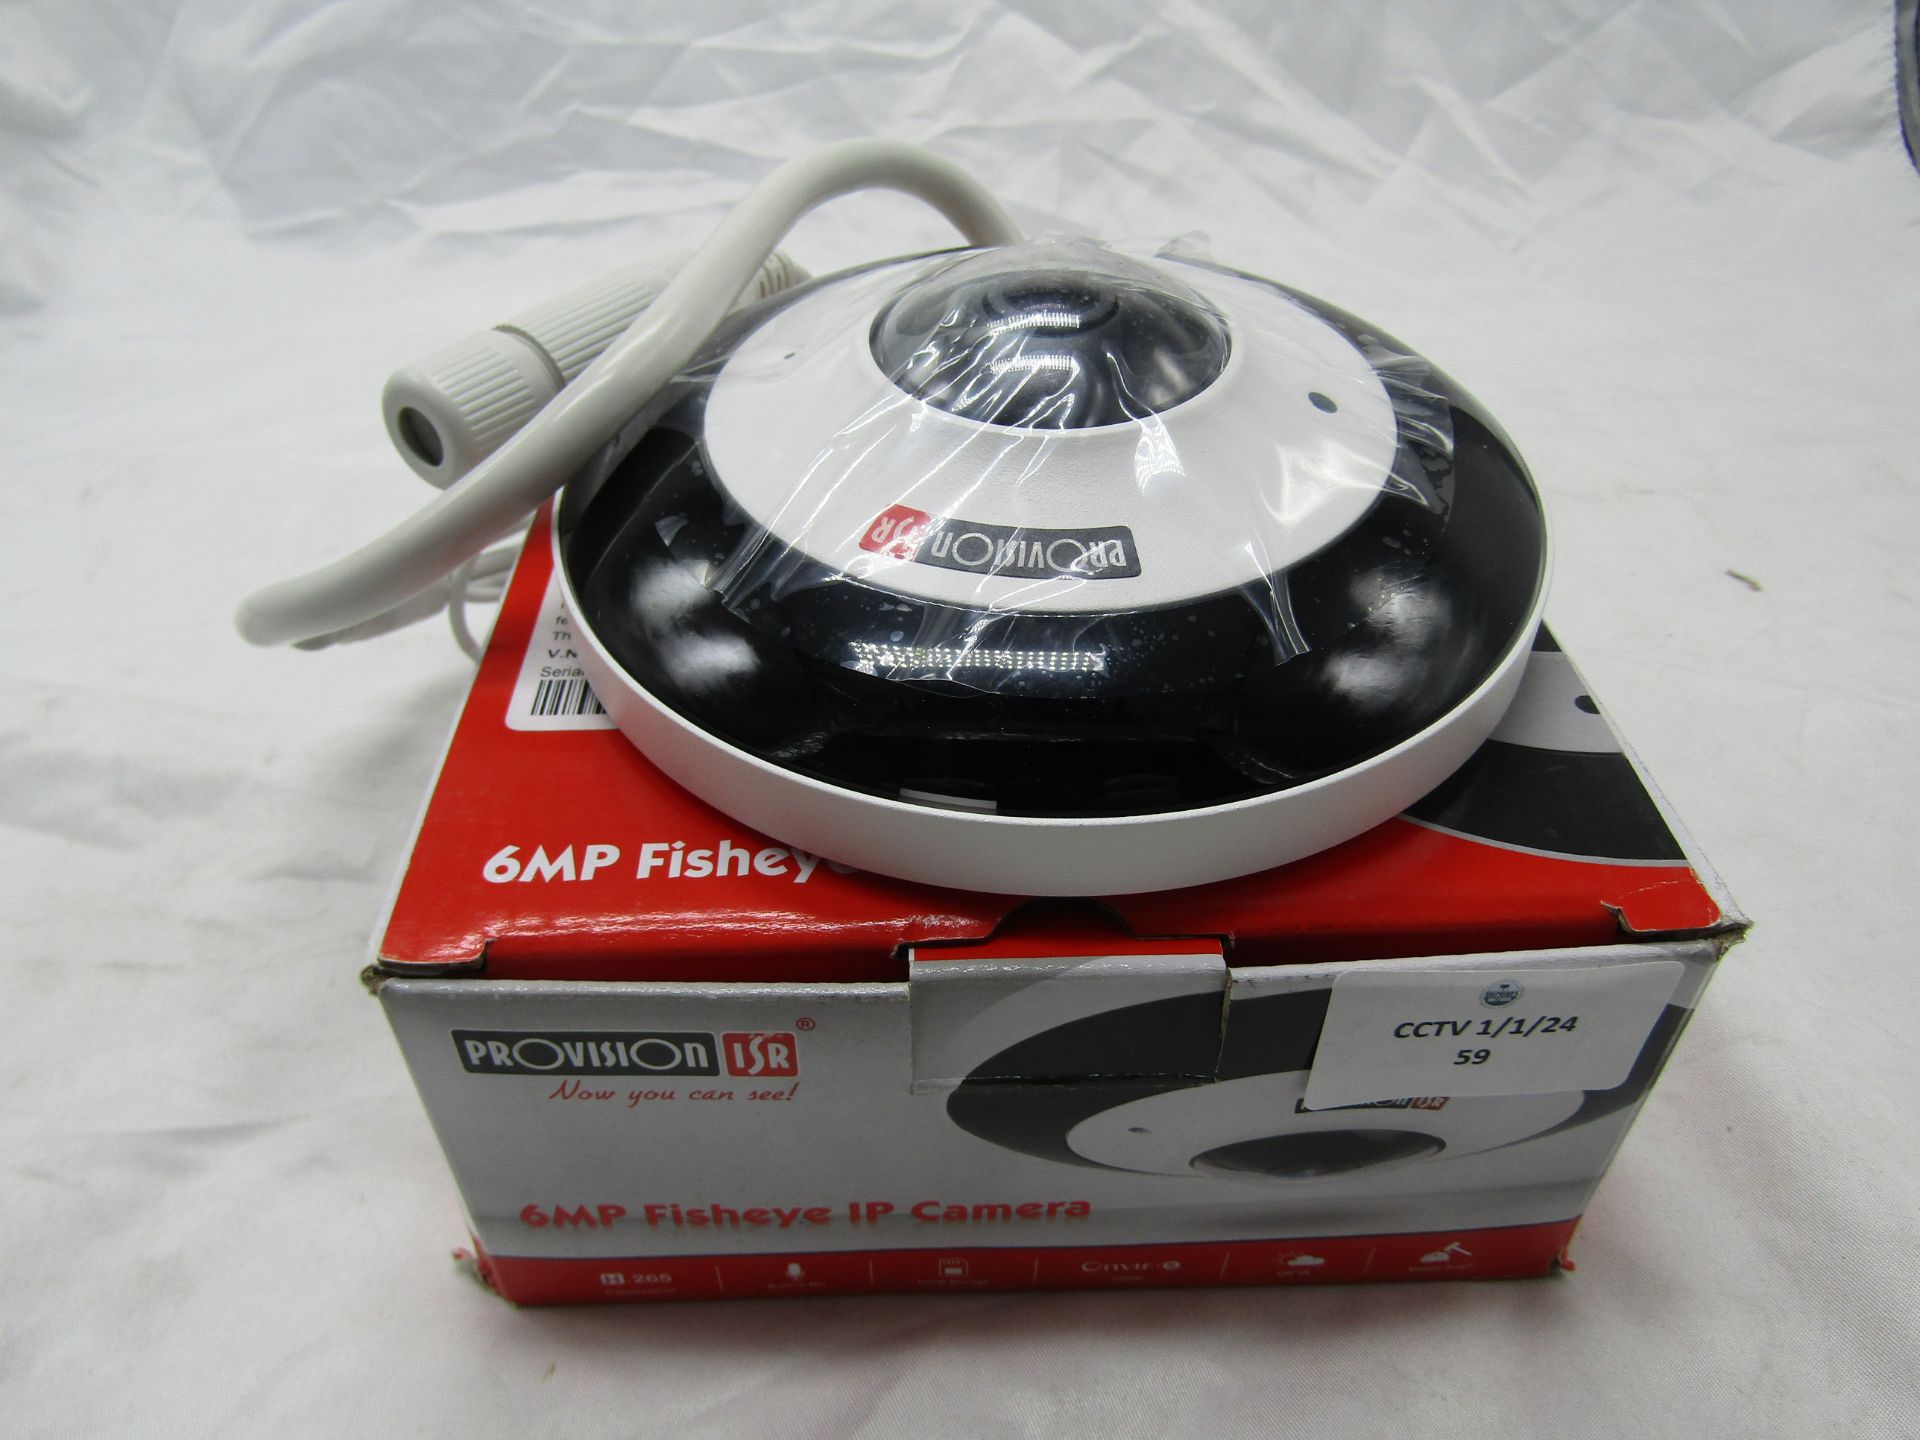 Provision 6mp Fisheye IP Camera. Model: FEI-36OIP5-V2 - Untested